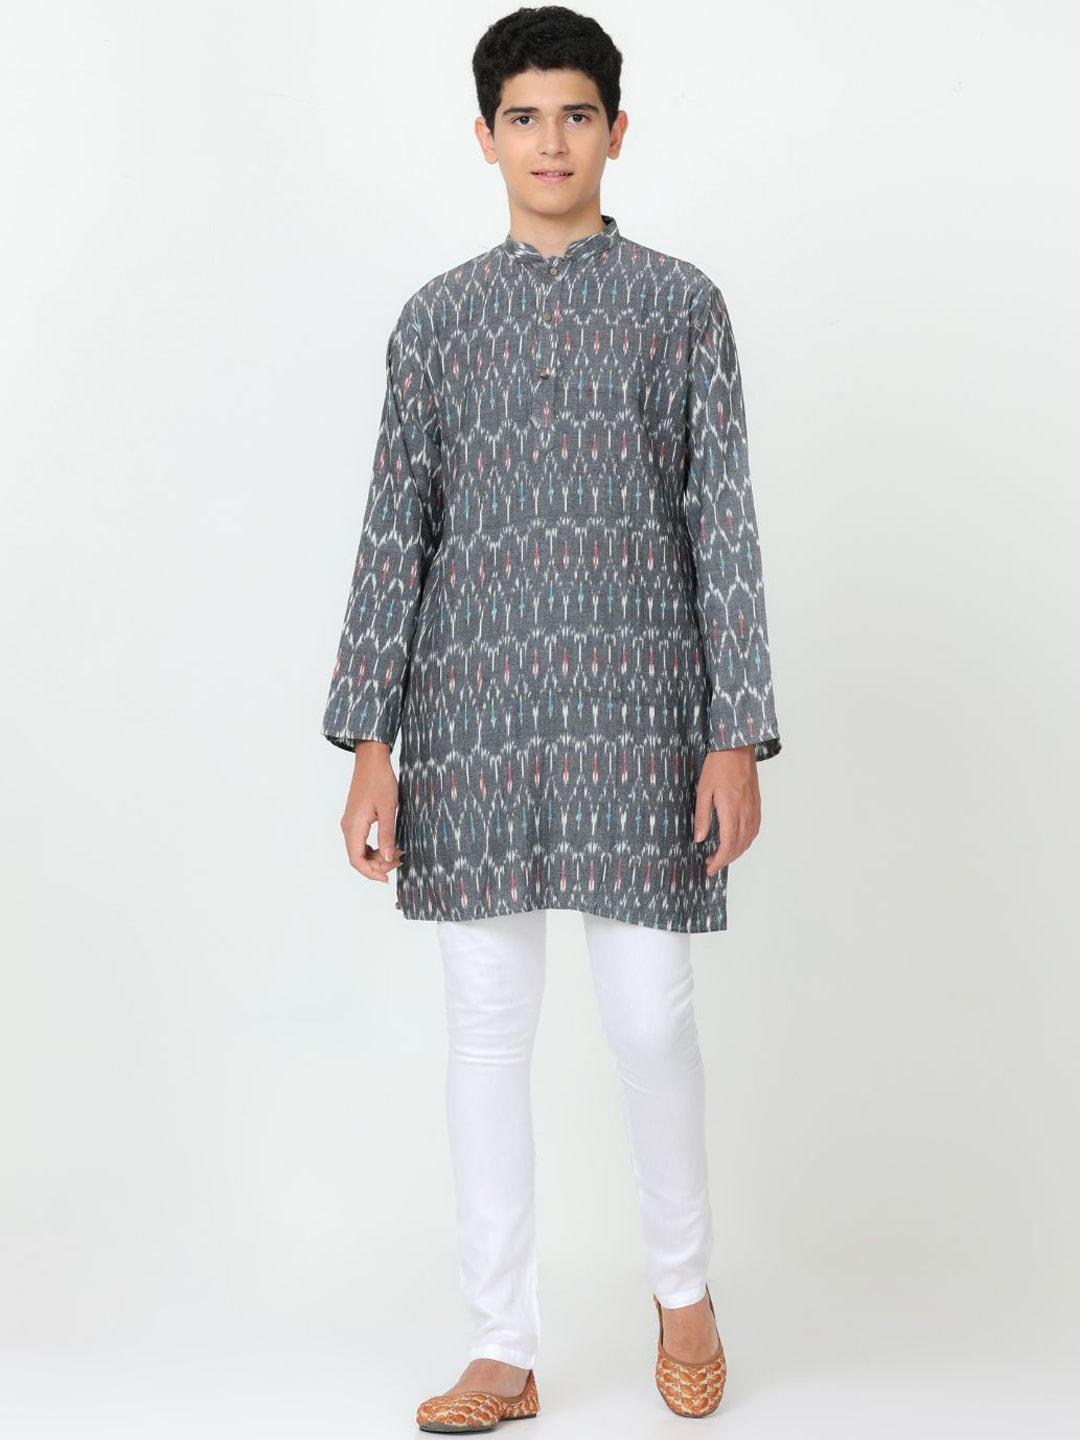 FLAVIDO Boys Grey Ethnic Motifs Printed Regular Pure Cotton Kurti with Pyjamas